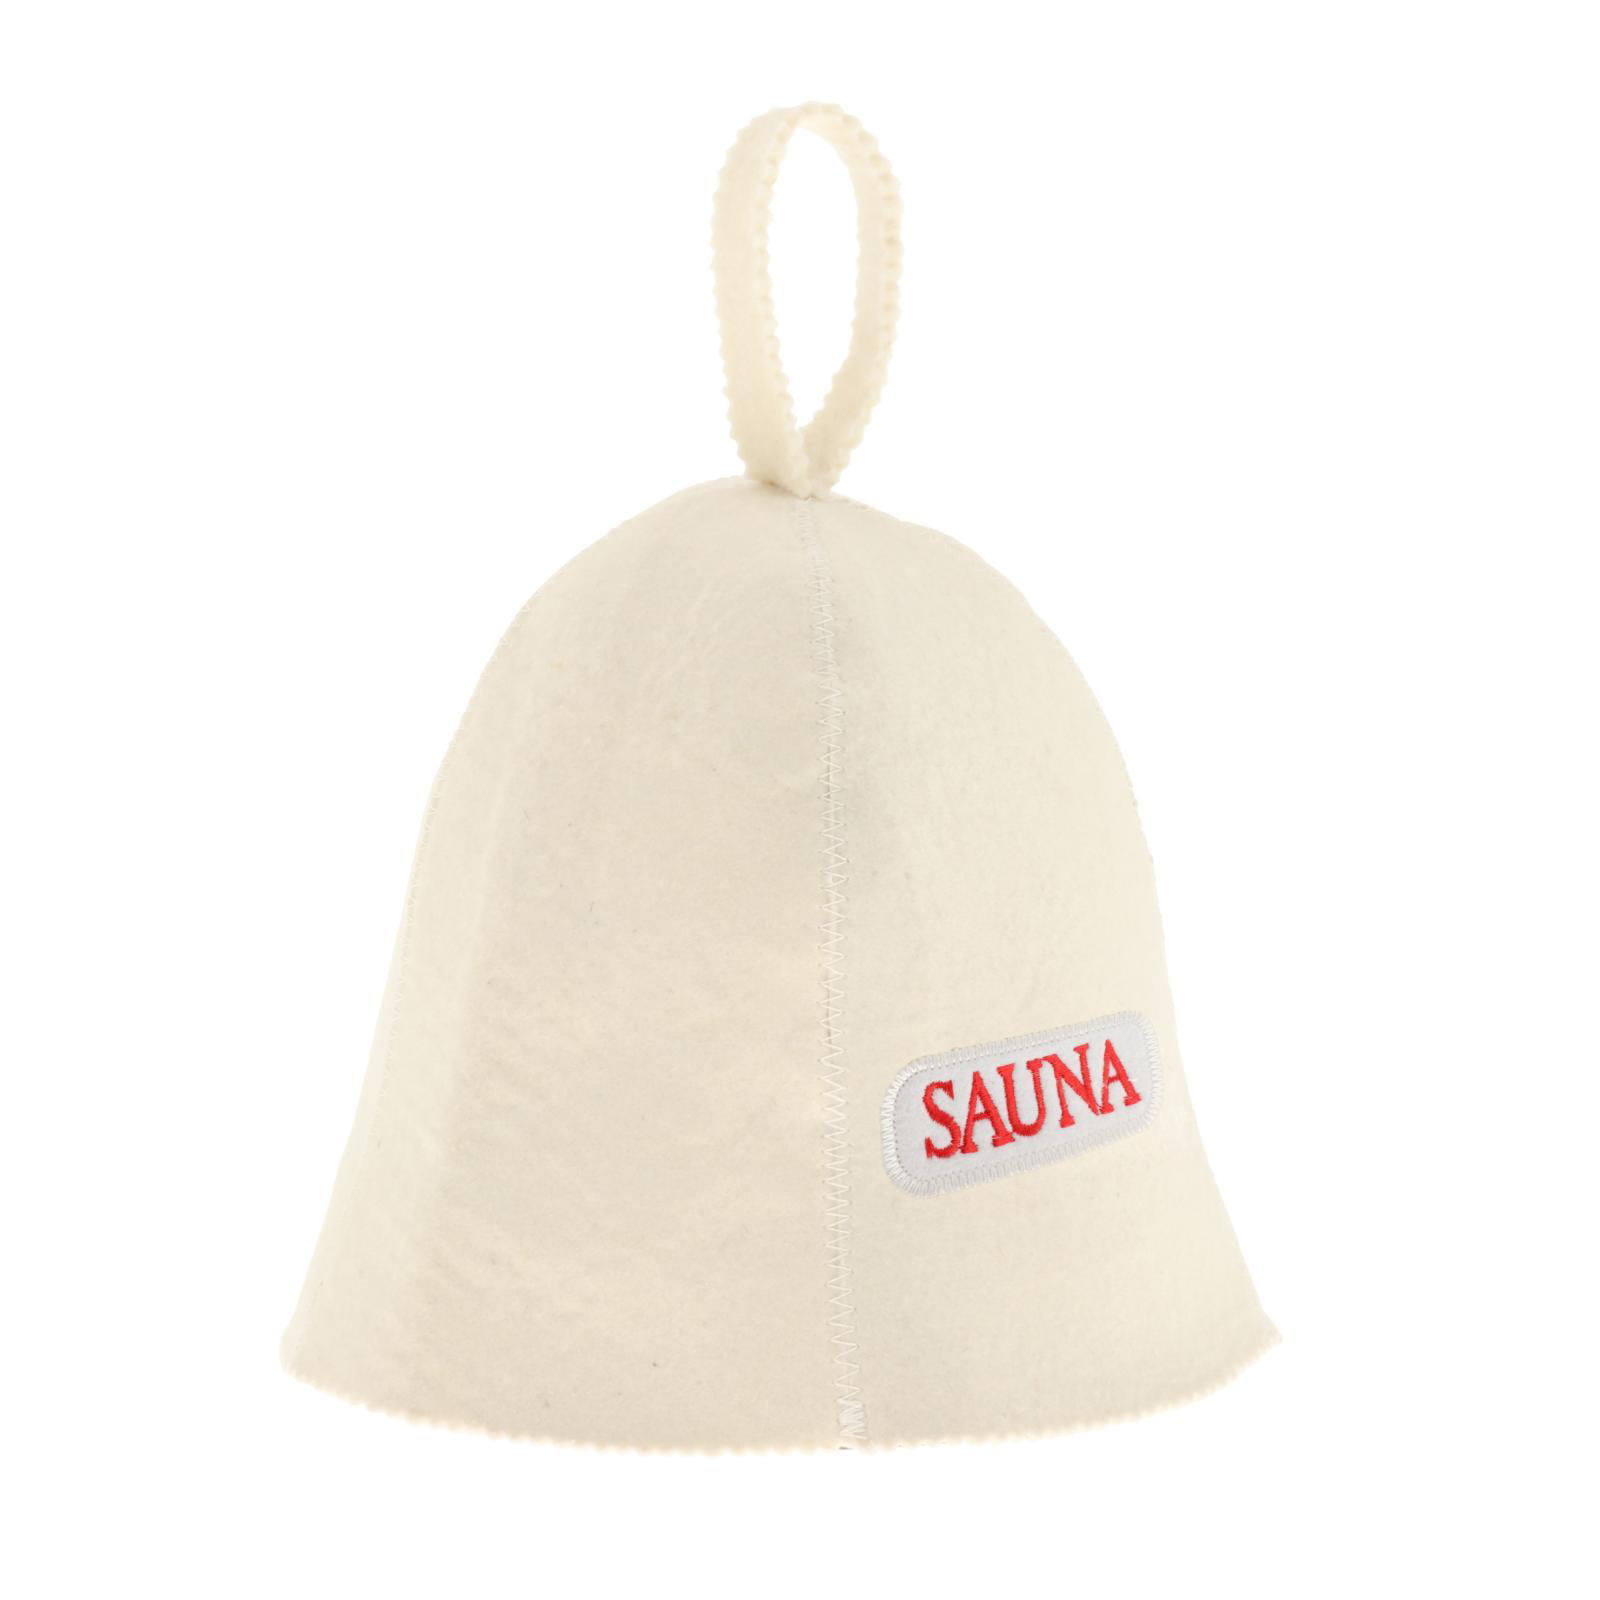 Saunahut Sauna Brown Felt Cap Hat Cap Sauna Hat for sauna sauna cap sauna